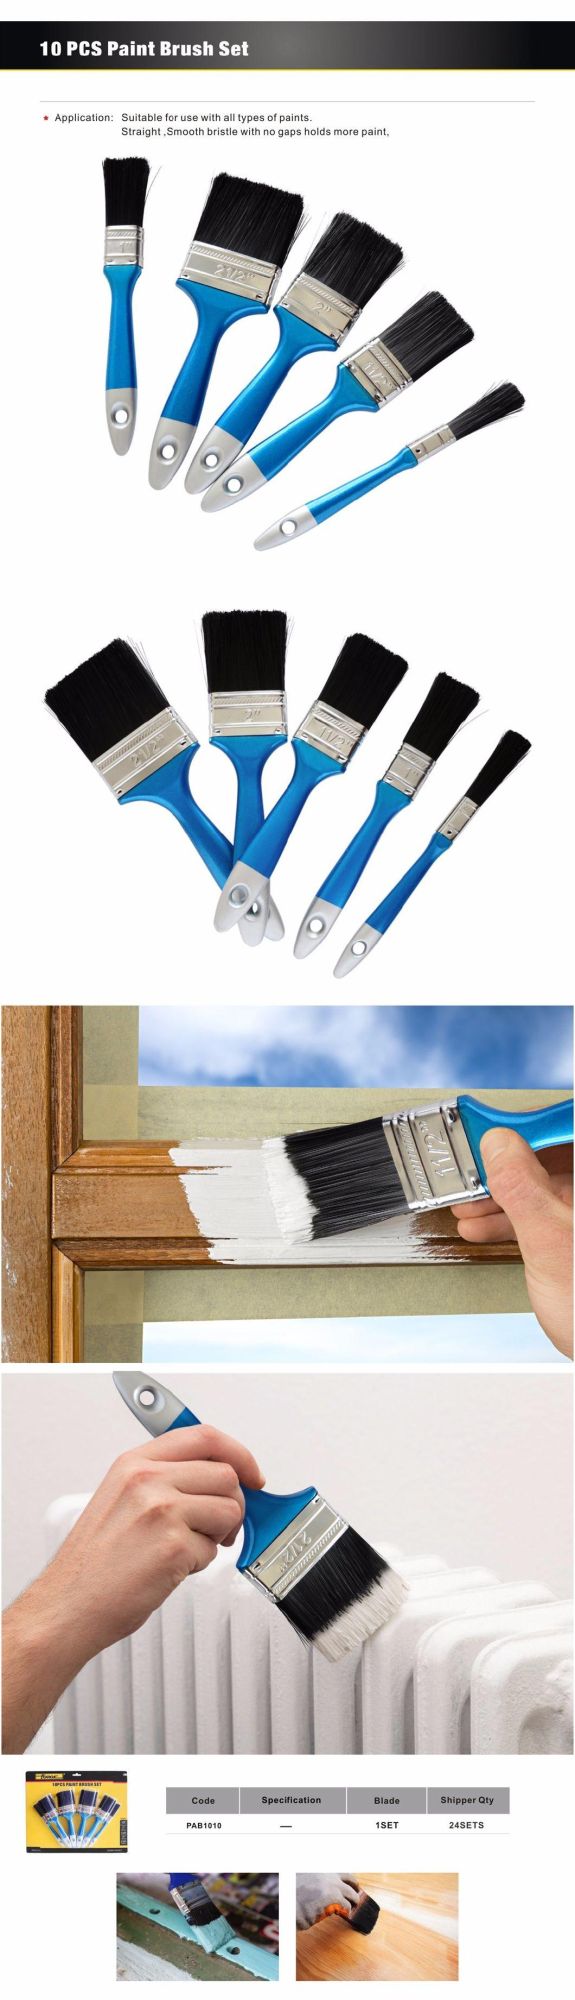 10PCS High Quality Paint Brush Set with PVC Bristles